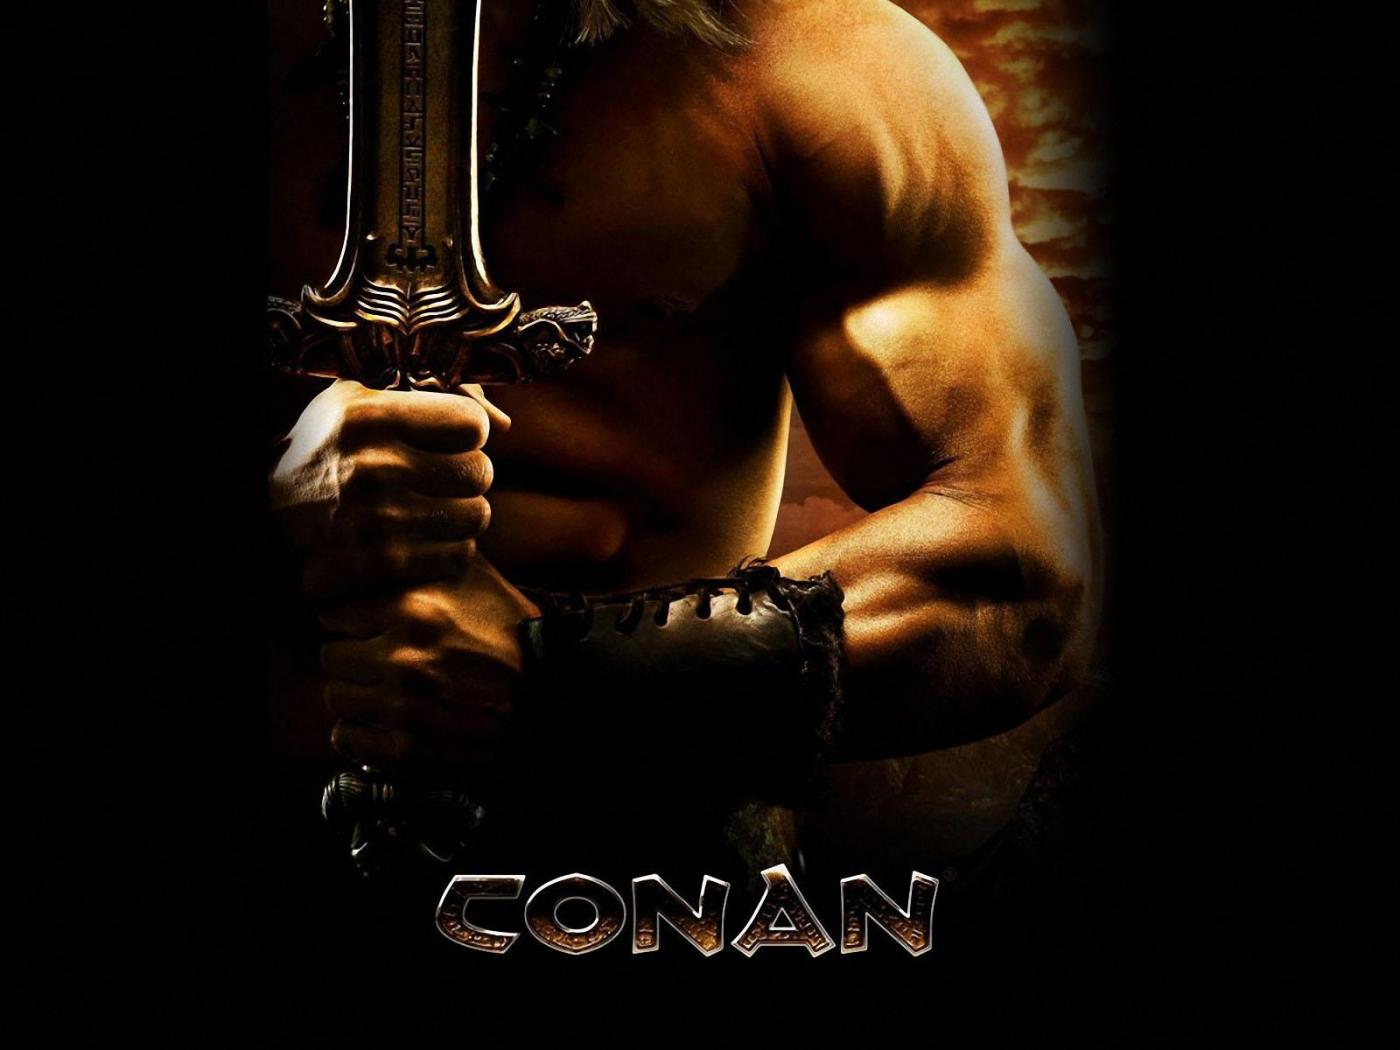 Conan the Barbarian HD 1400x1050 Wallpapers, 1400x1050 Wallpapers